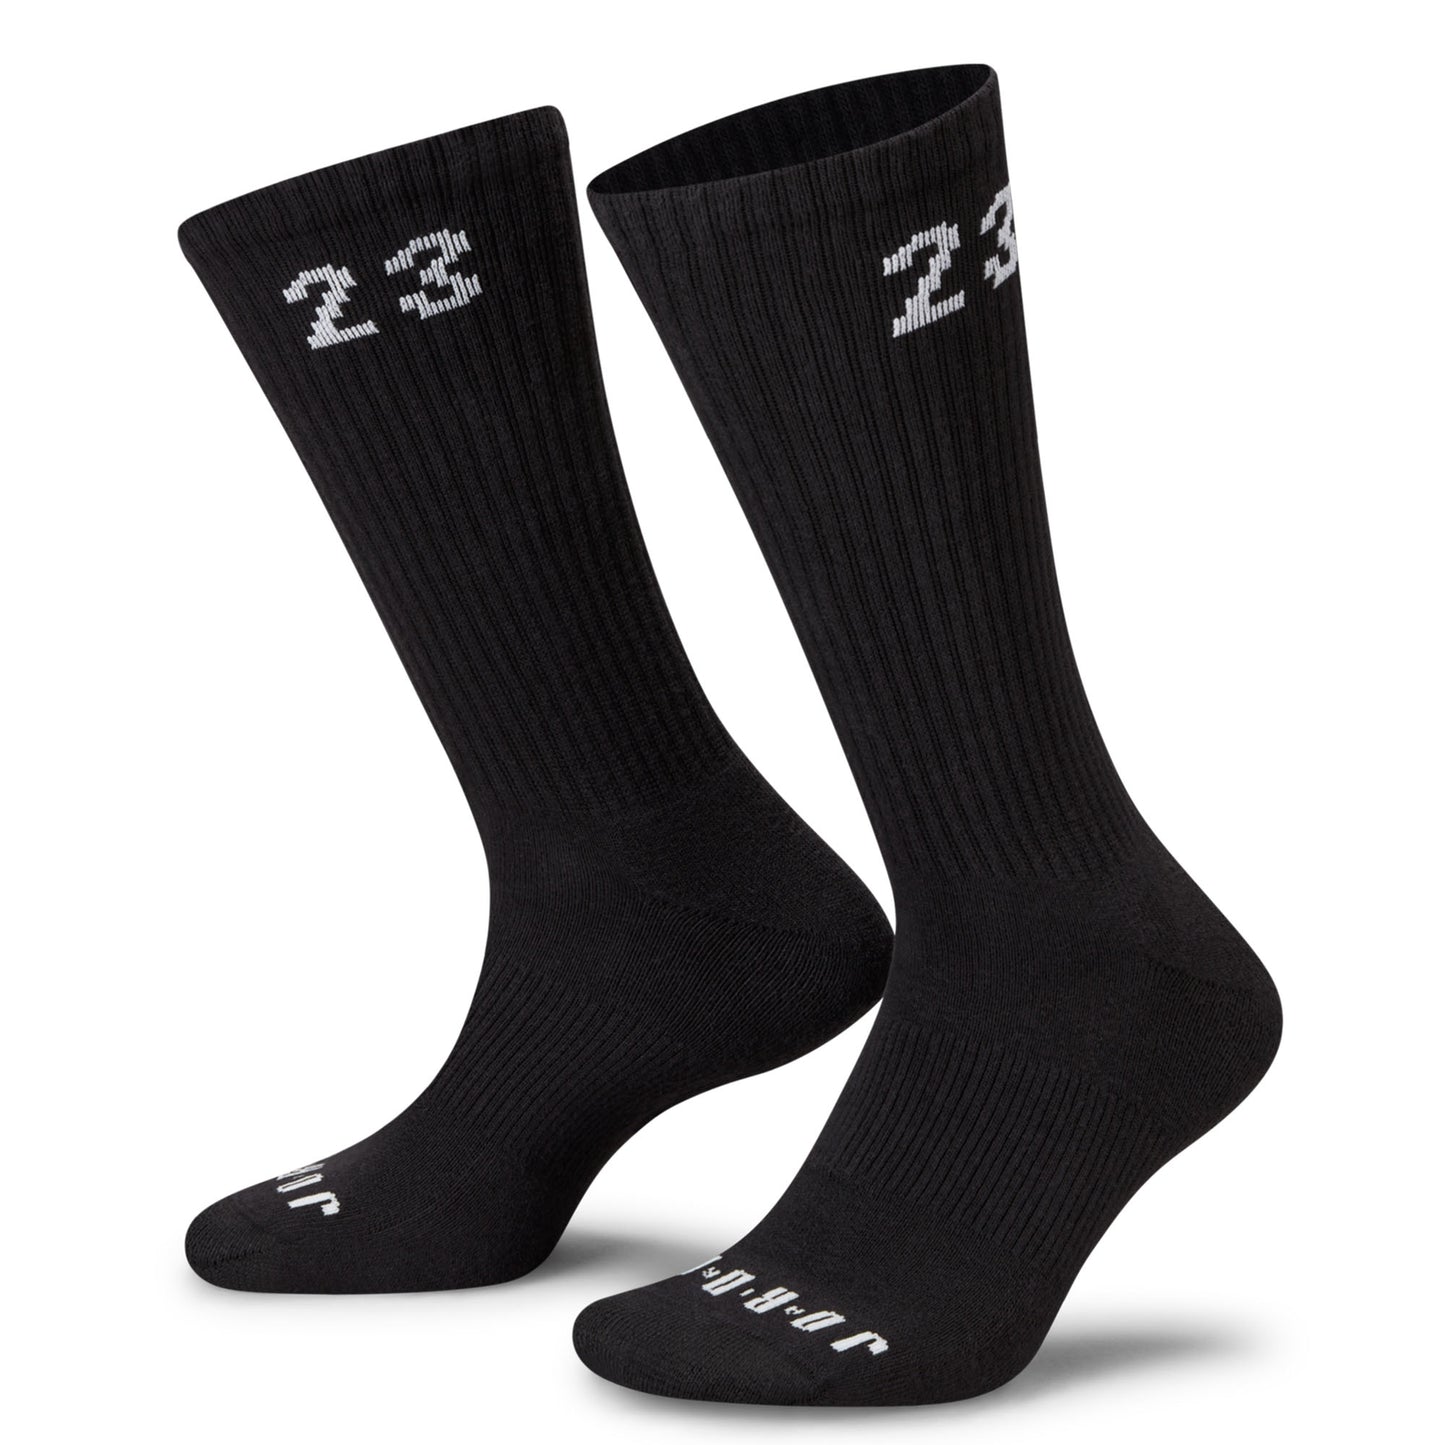 Jordan Essentials Crew Socks Black / White 3 Pack